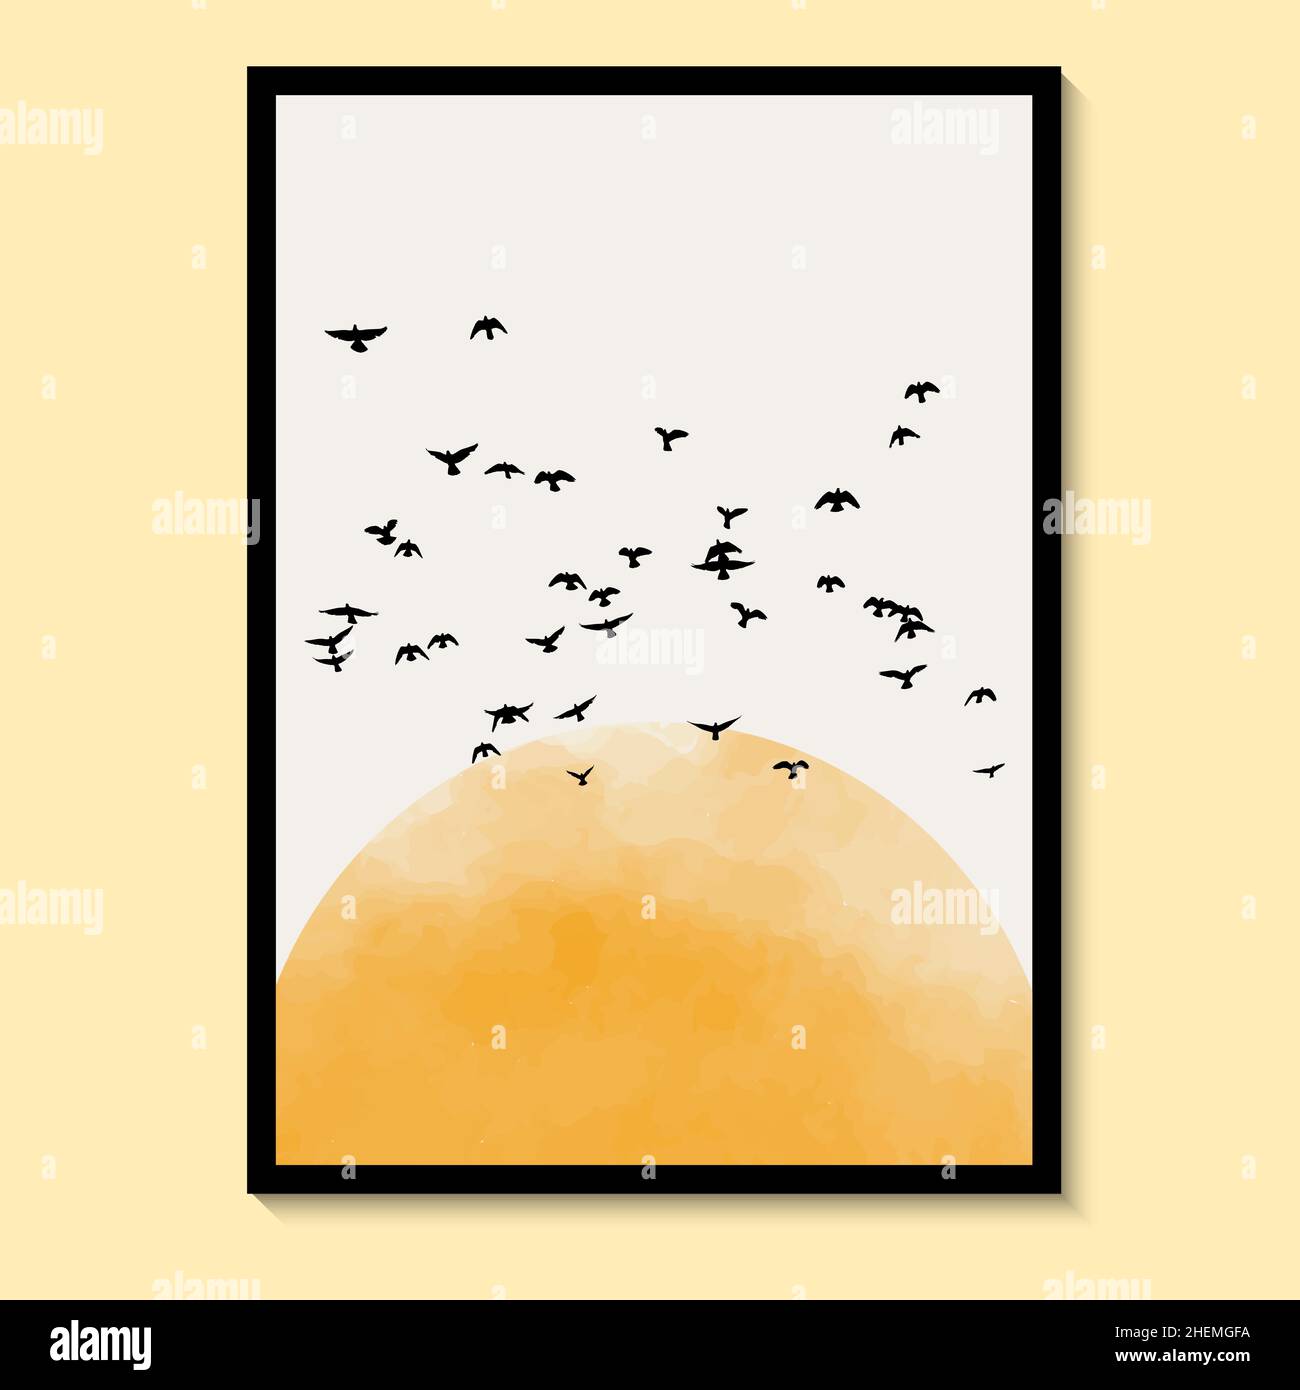 Abstrakte Natur und Vögel Sonnengelbe Kunst Aquarell Wandmalerei Poster und Drucke skandinavische Wandmalerei Vektor Art Print. Stock Vektor